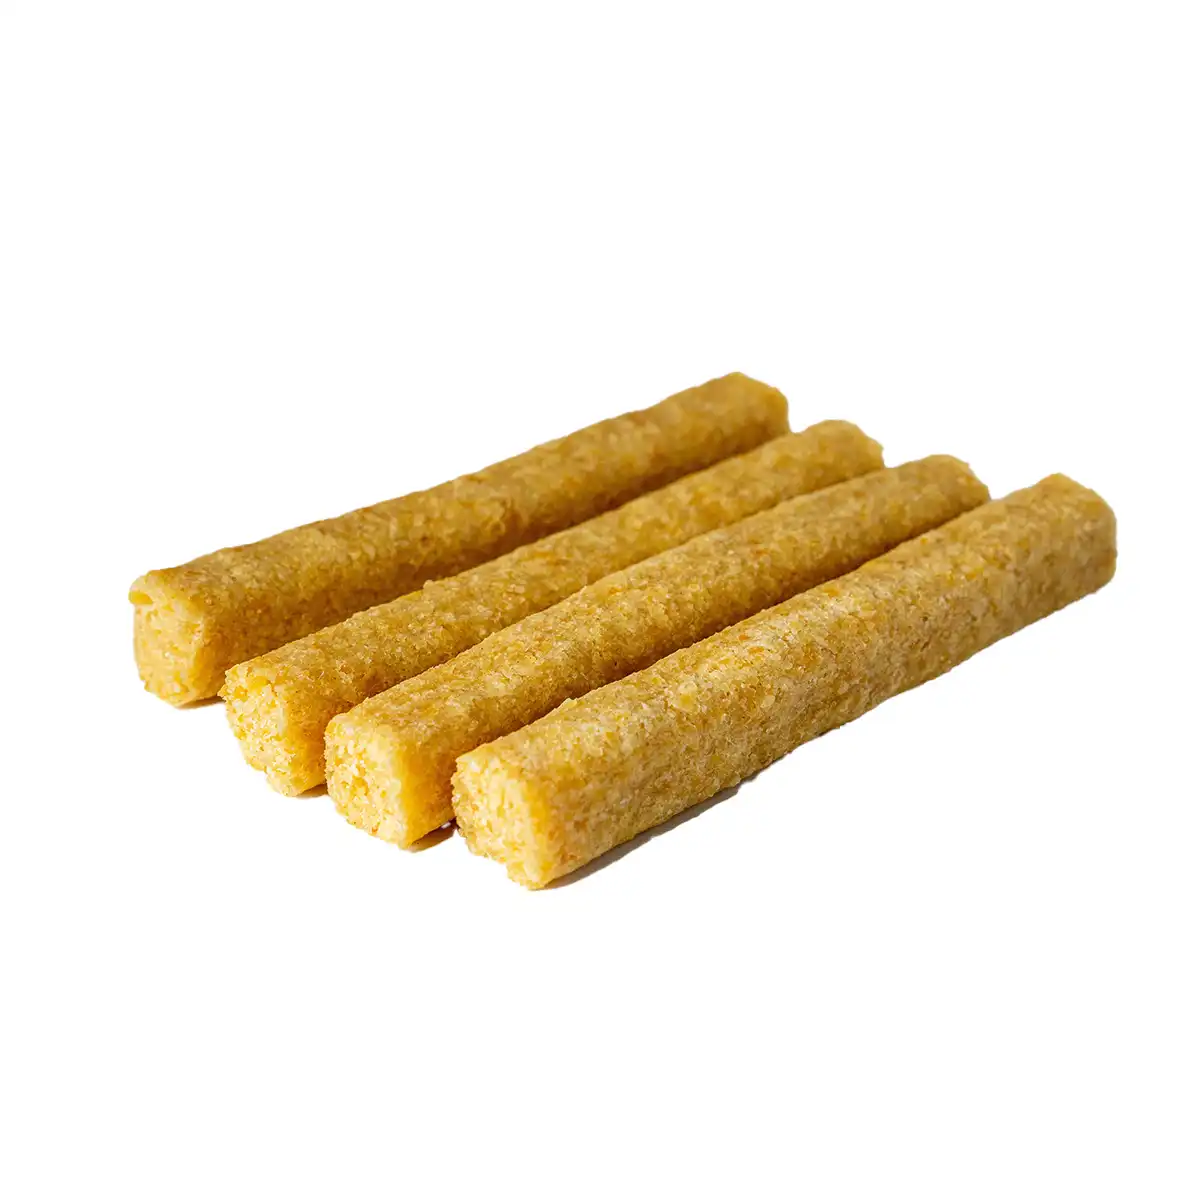 DAUERKAUER Crispy Cheese Stick